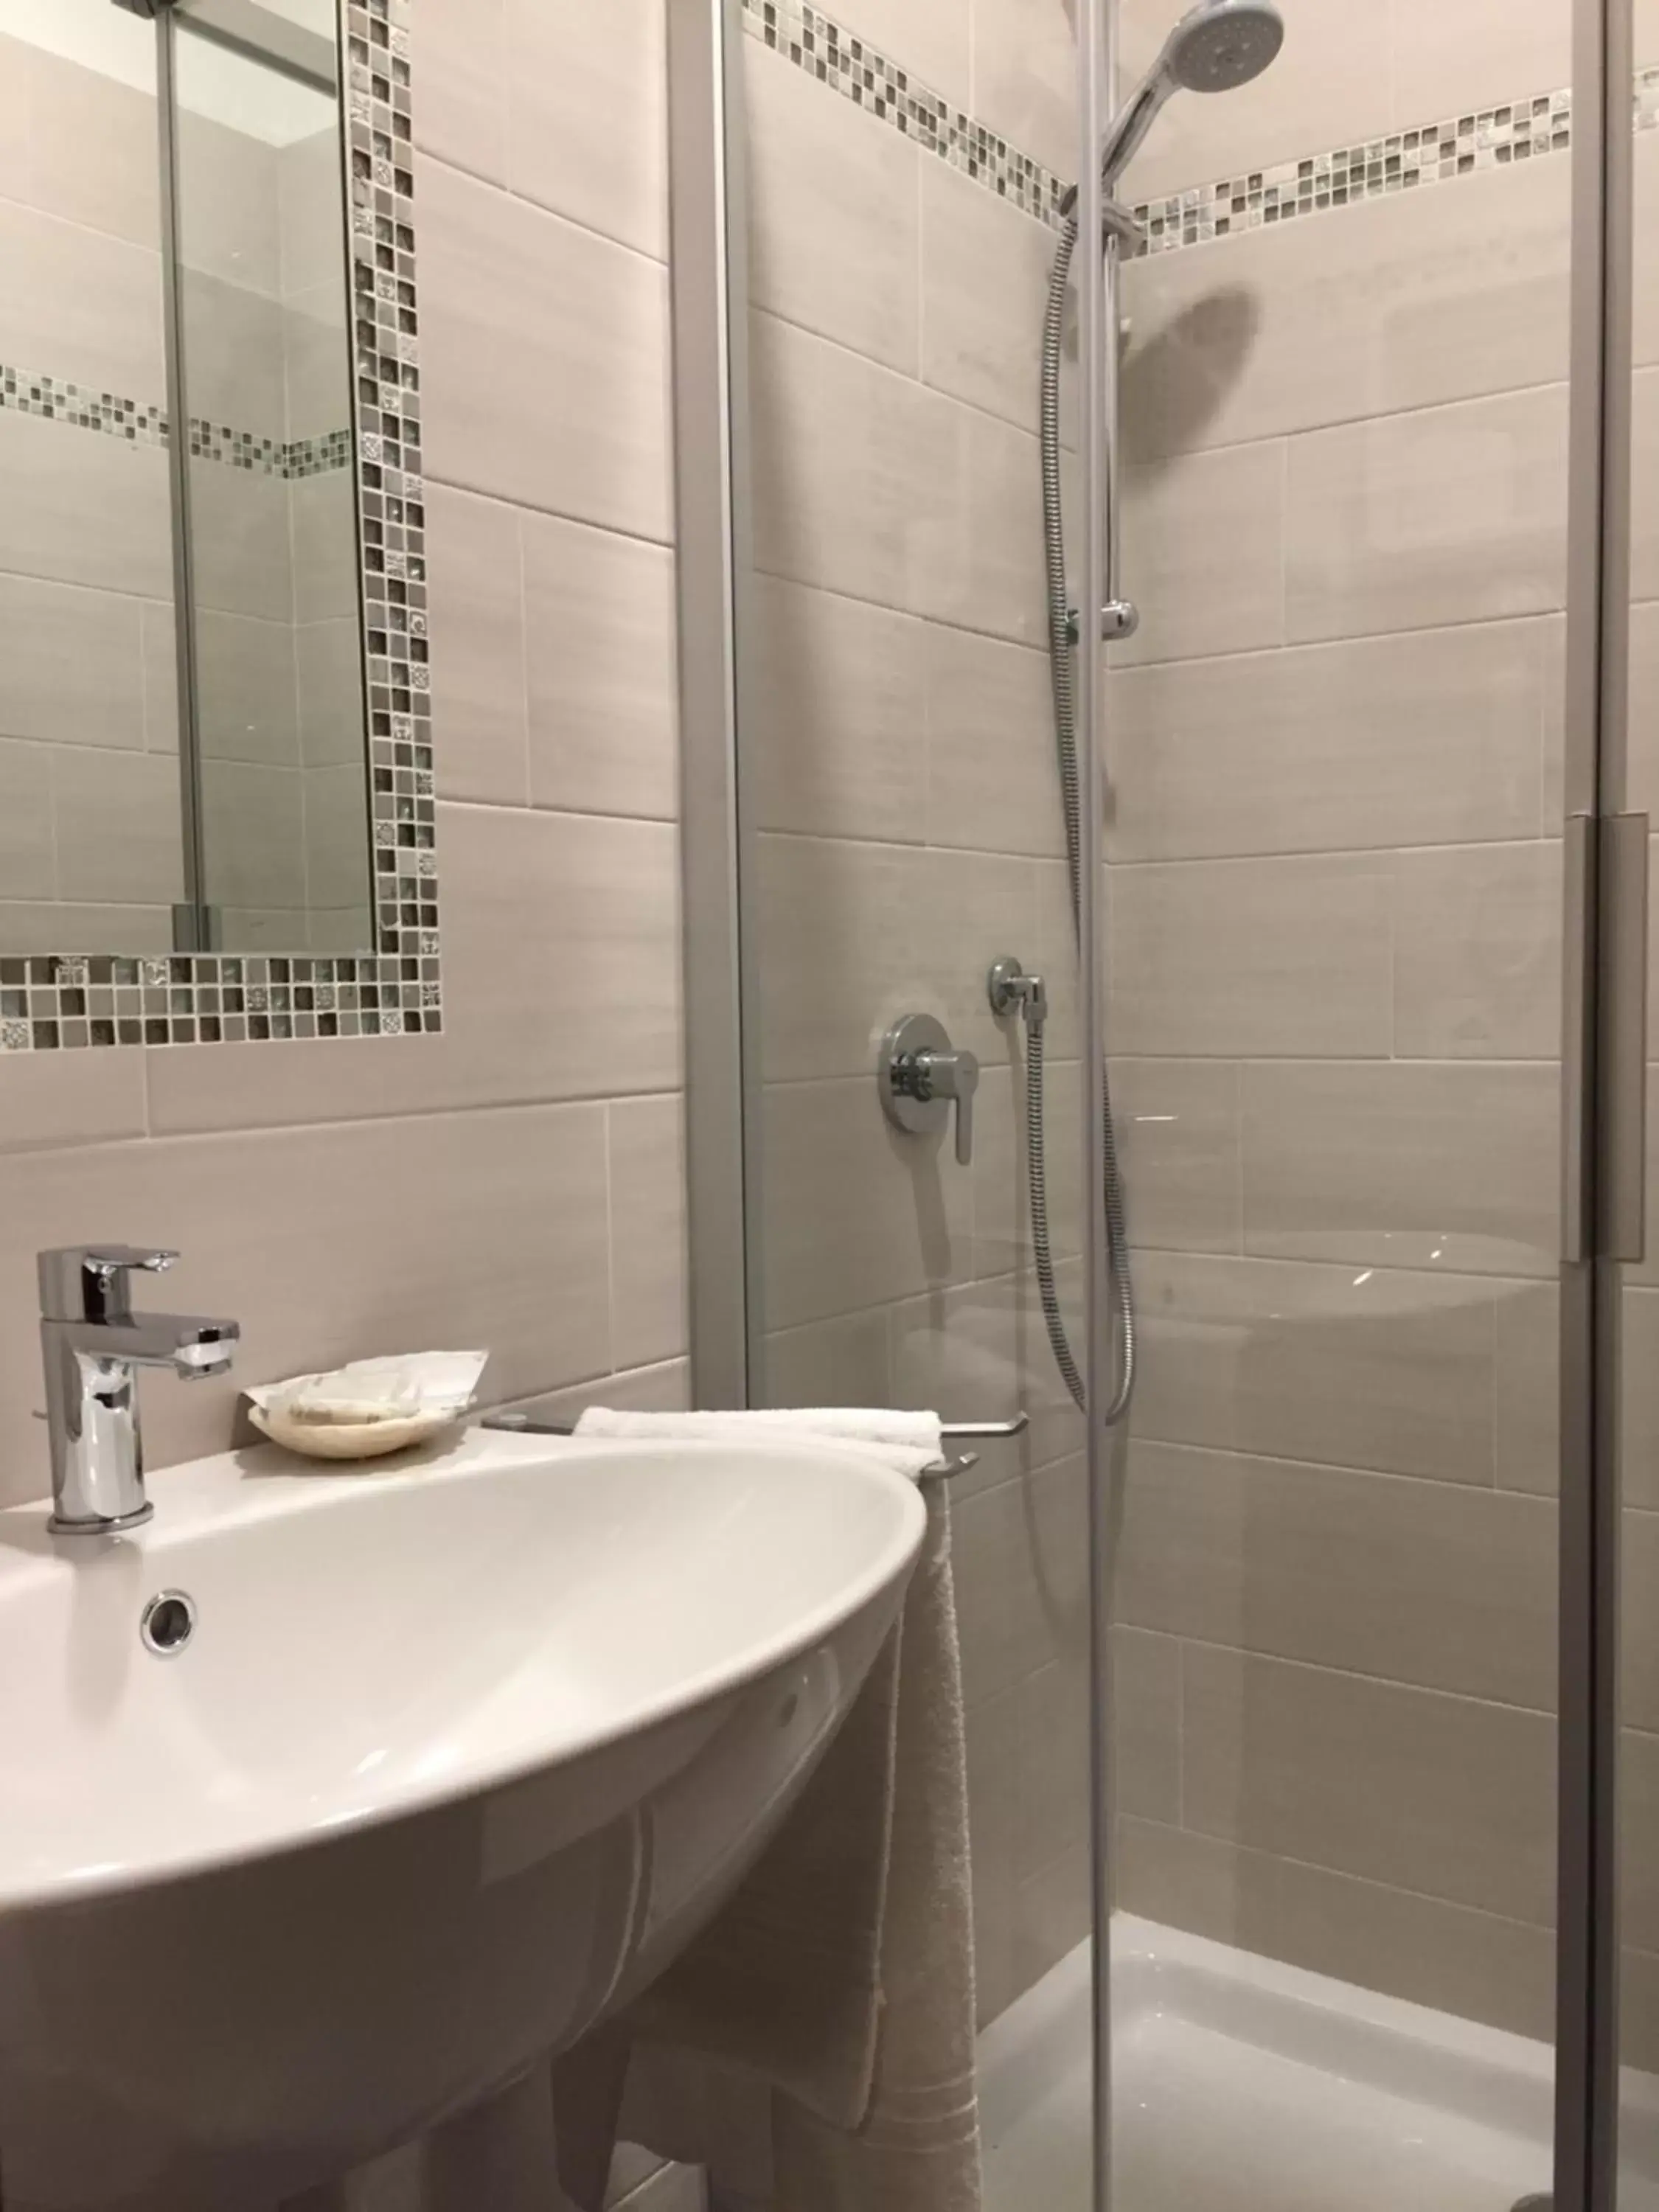 Photo of the whole room, Bathroom in Hotel Guerrini